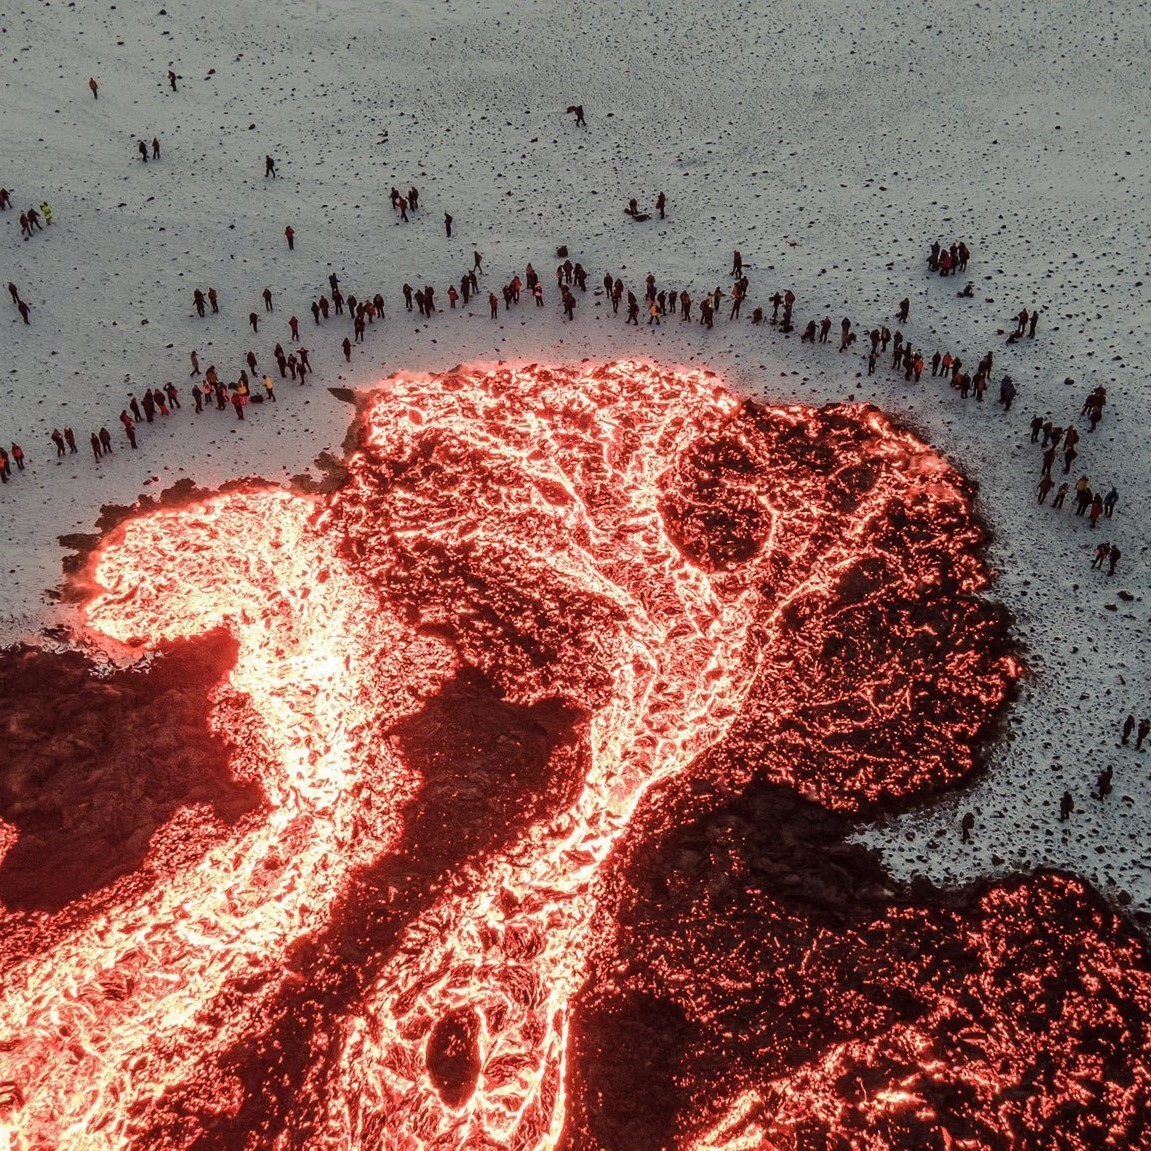 People gathered around lava, Iceland.